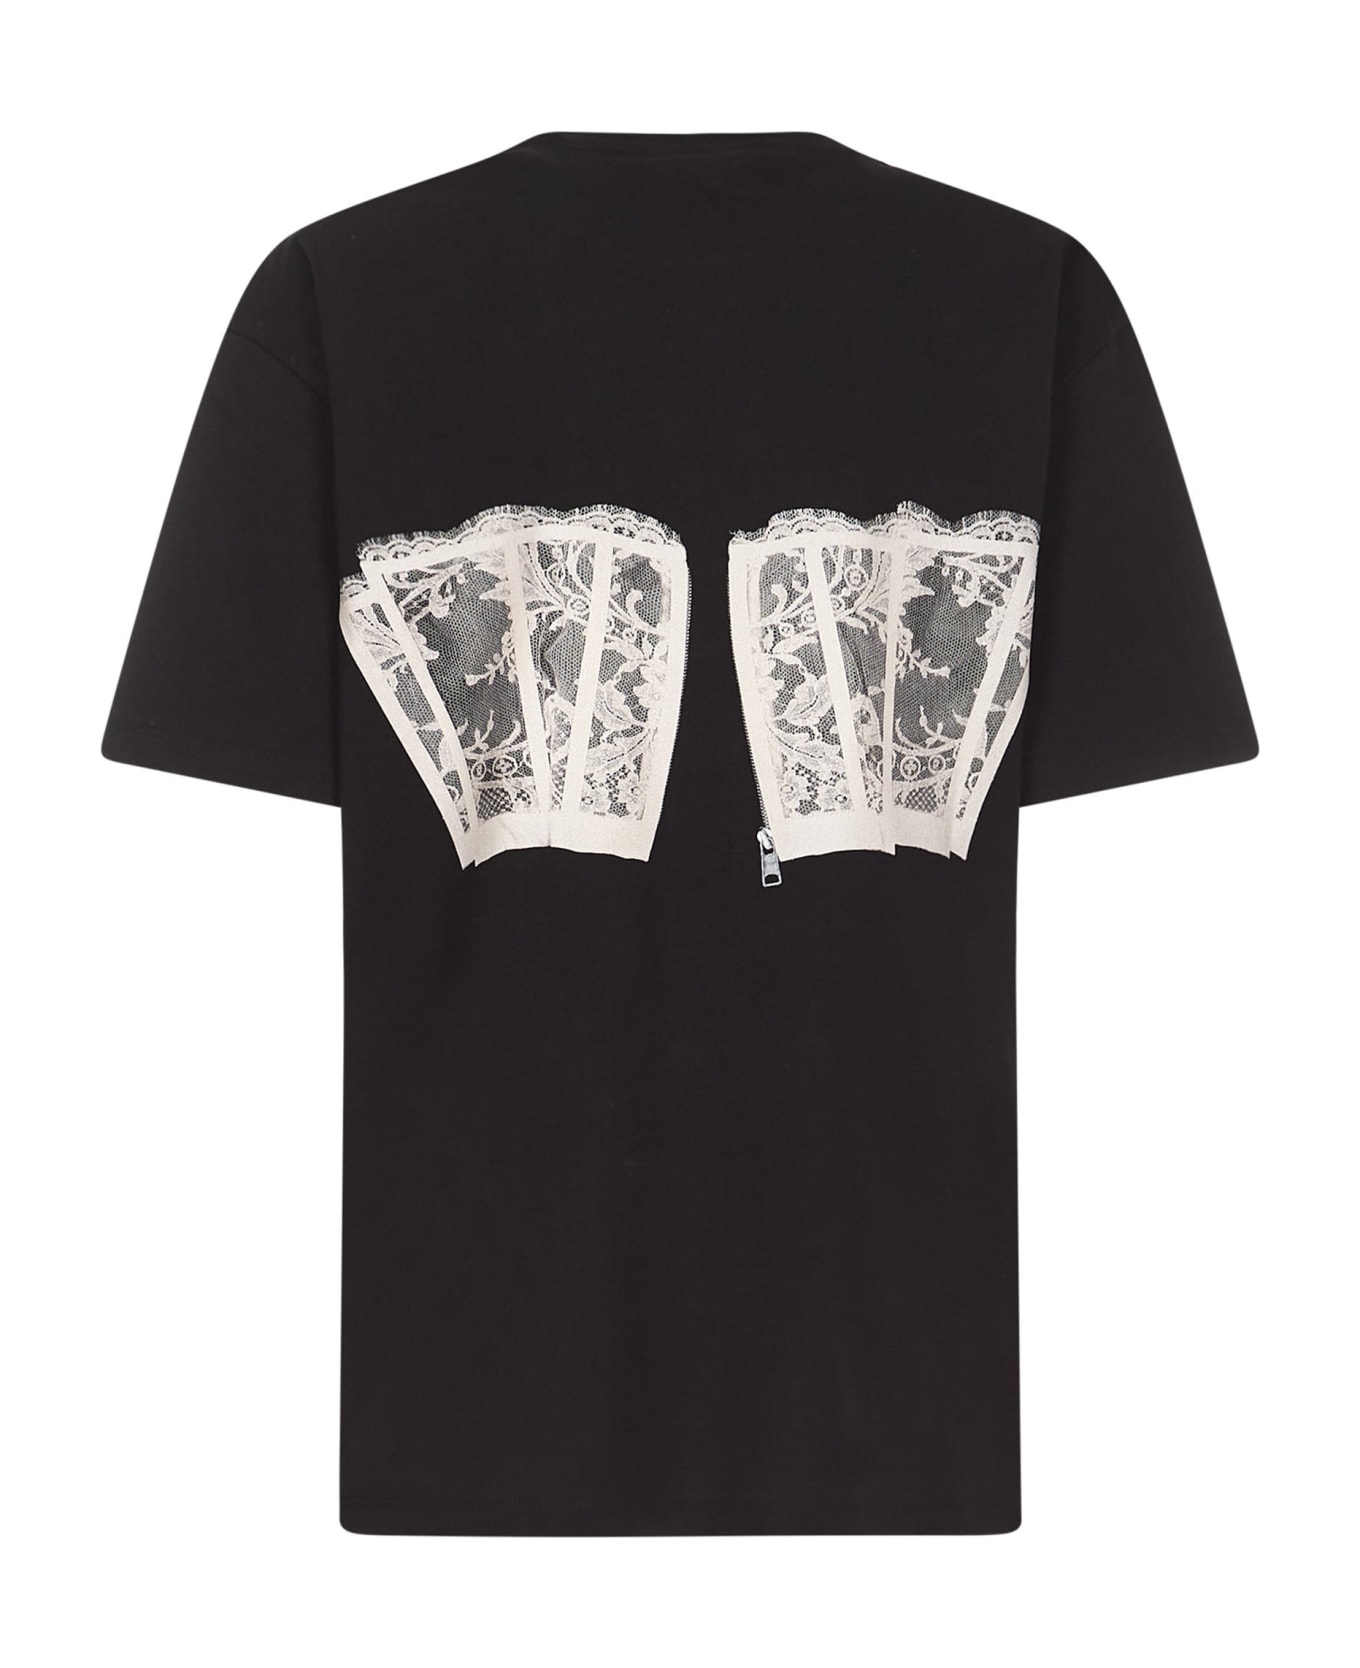 Alexander McQueen T-shirt - Black Tシャツ